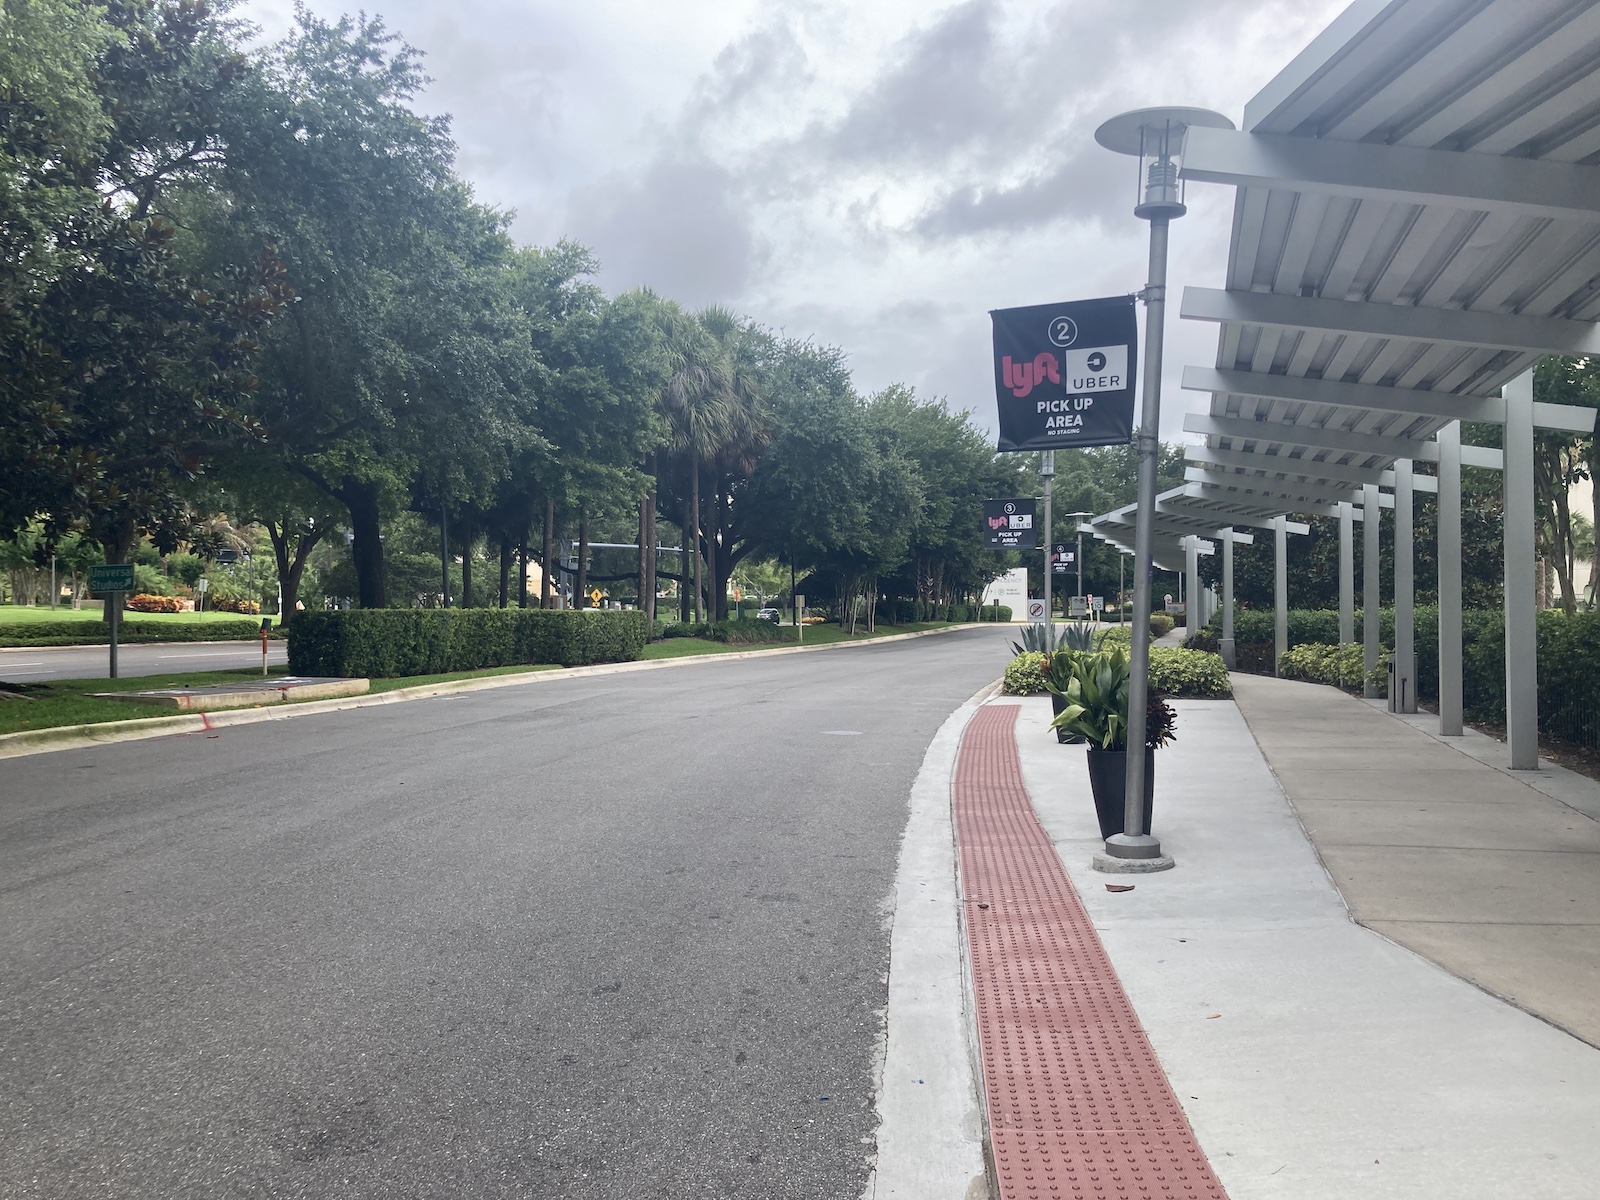 Image of rideshare waiting and pickup area outside Hyatt Regency Orlando